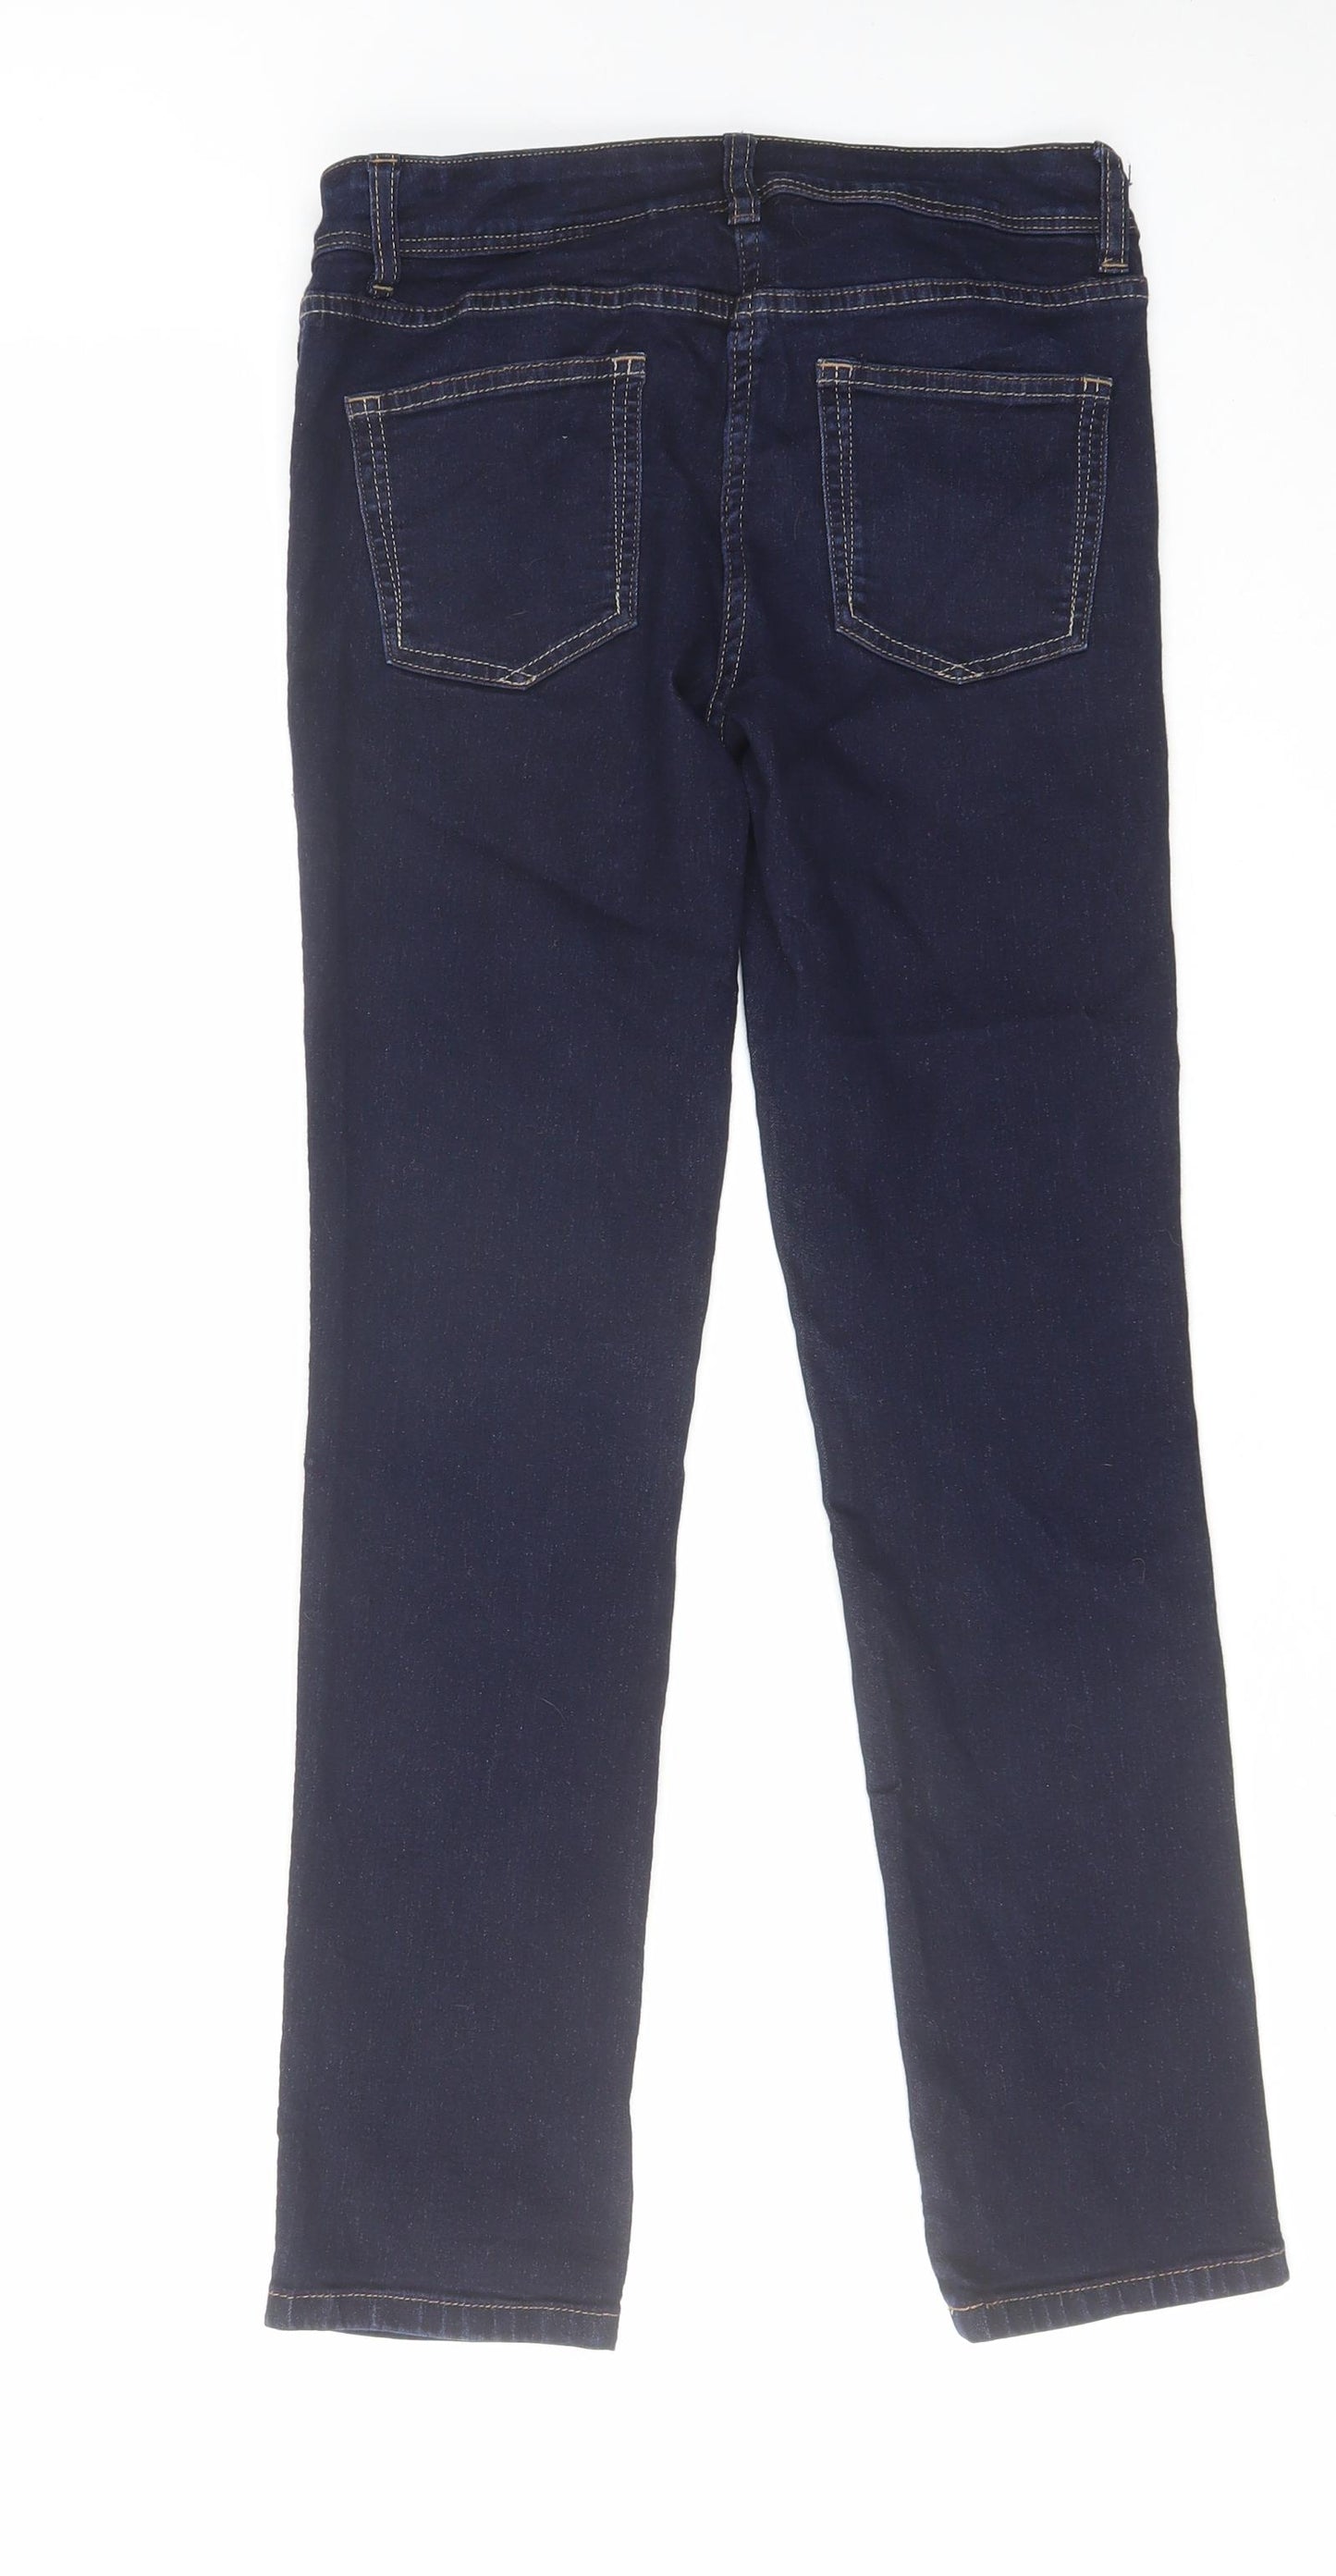 NEXT Womens Blue Cotton Skinny Jeans Size 8 L28 in Slim Zip